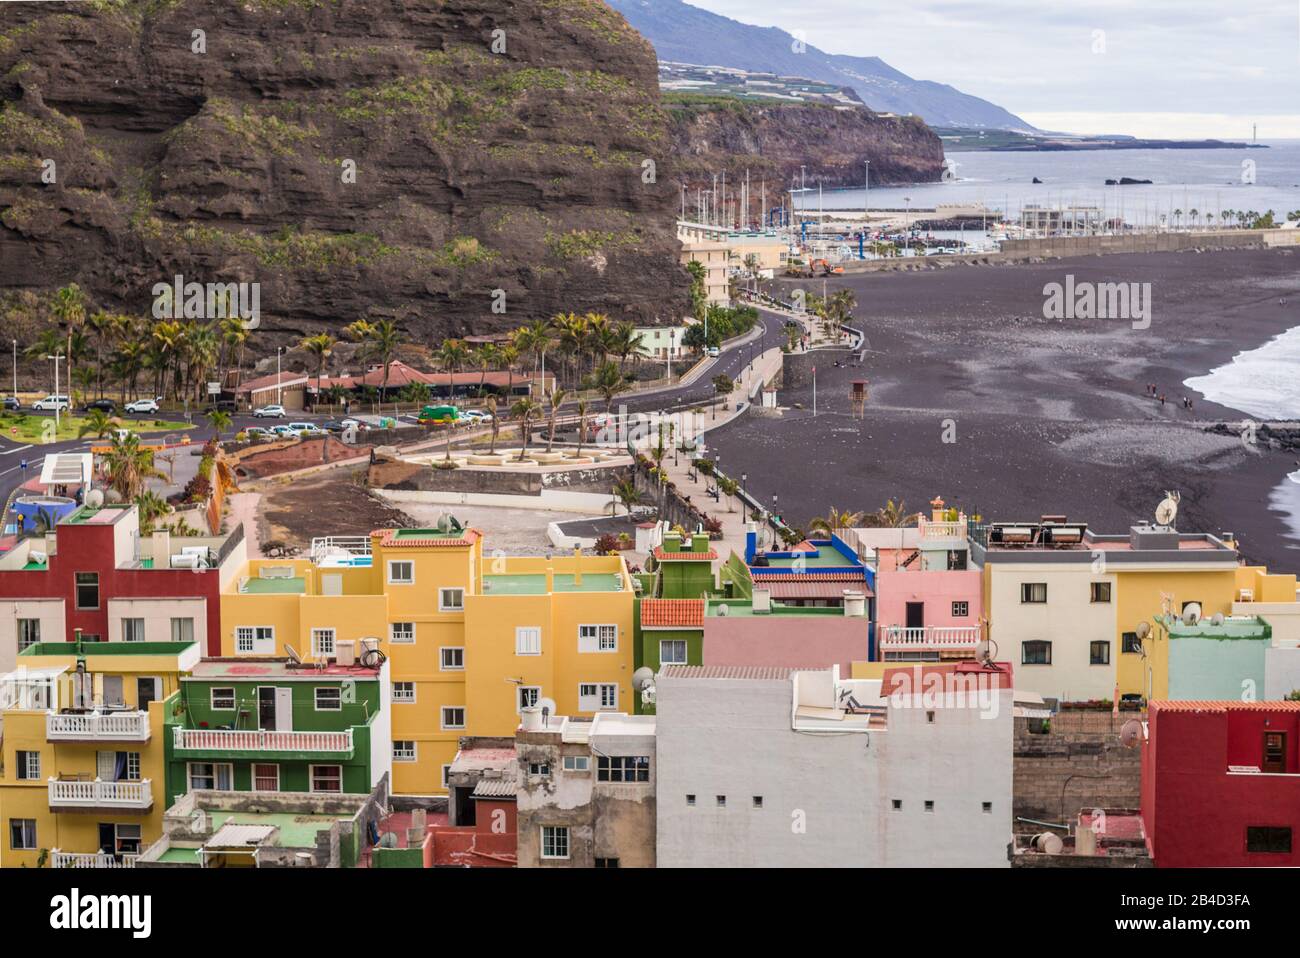 Spain, Canary Islands, La Palma Island, Tazacorte, resort town elevated view Stock Photo